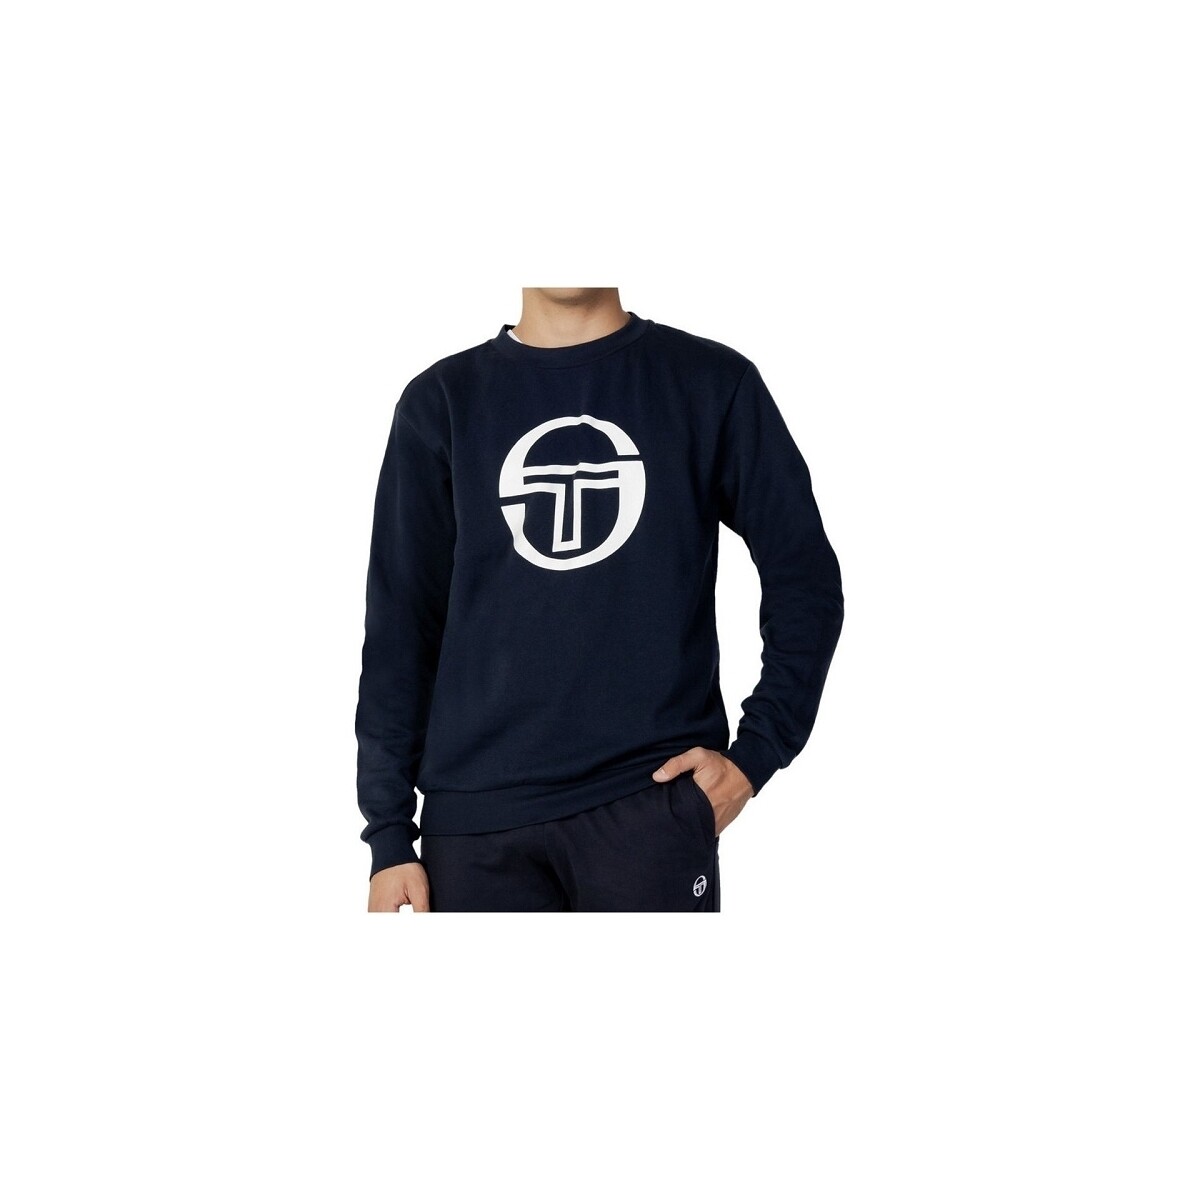 Textiel Heren Sweaters / Sweatshirts Sergio Tacchini SERG SWEATER Blauw